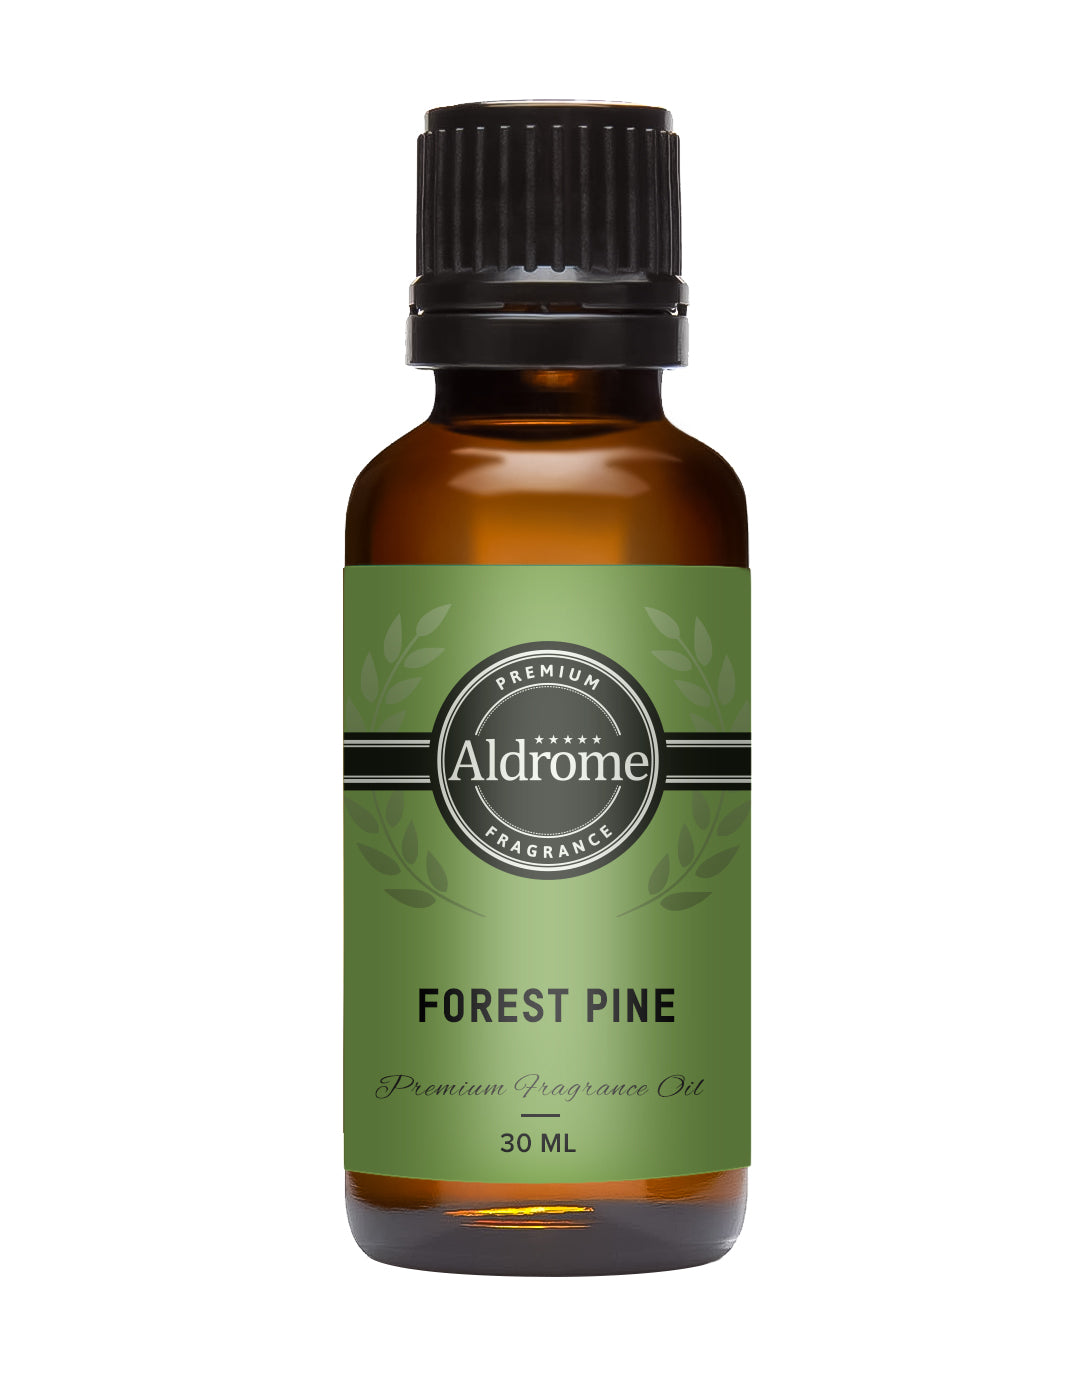 Forest Pine Fragrance Oil - 30ml | Buy Forest Pine Fragrance Oil | Aldrome Premium Fragrance Oil